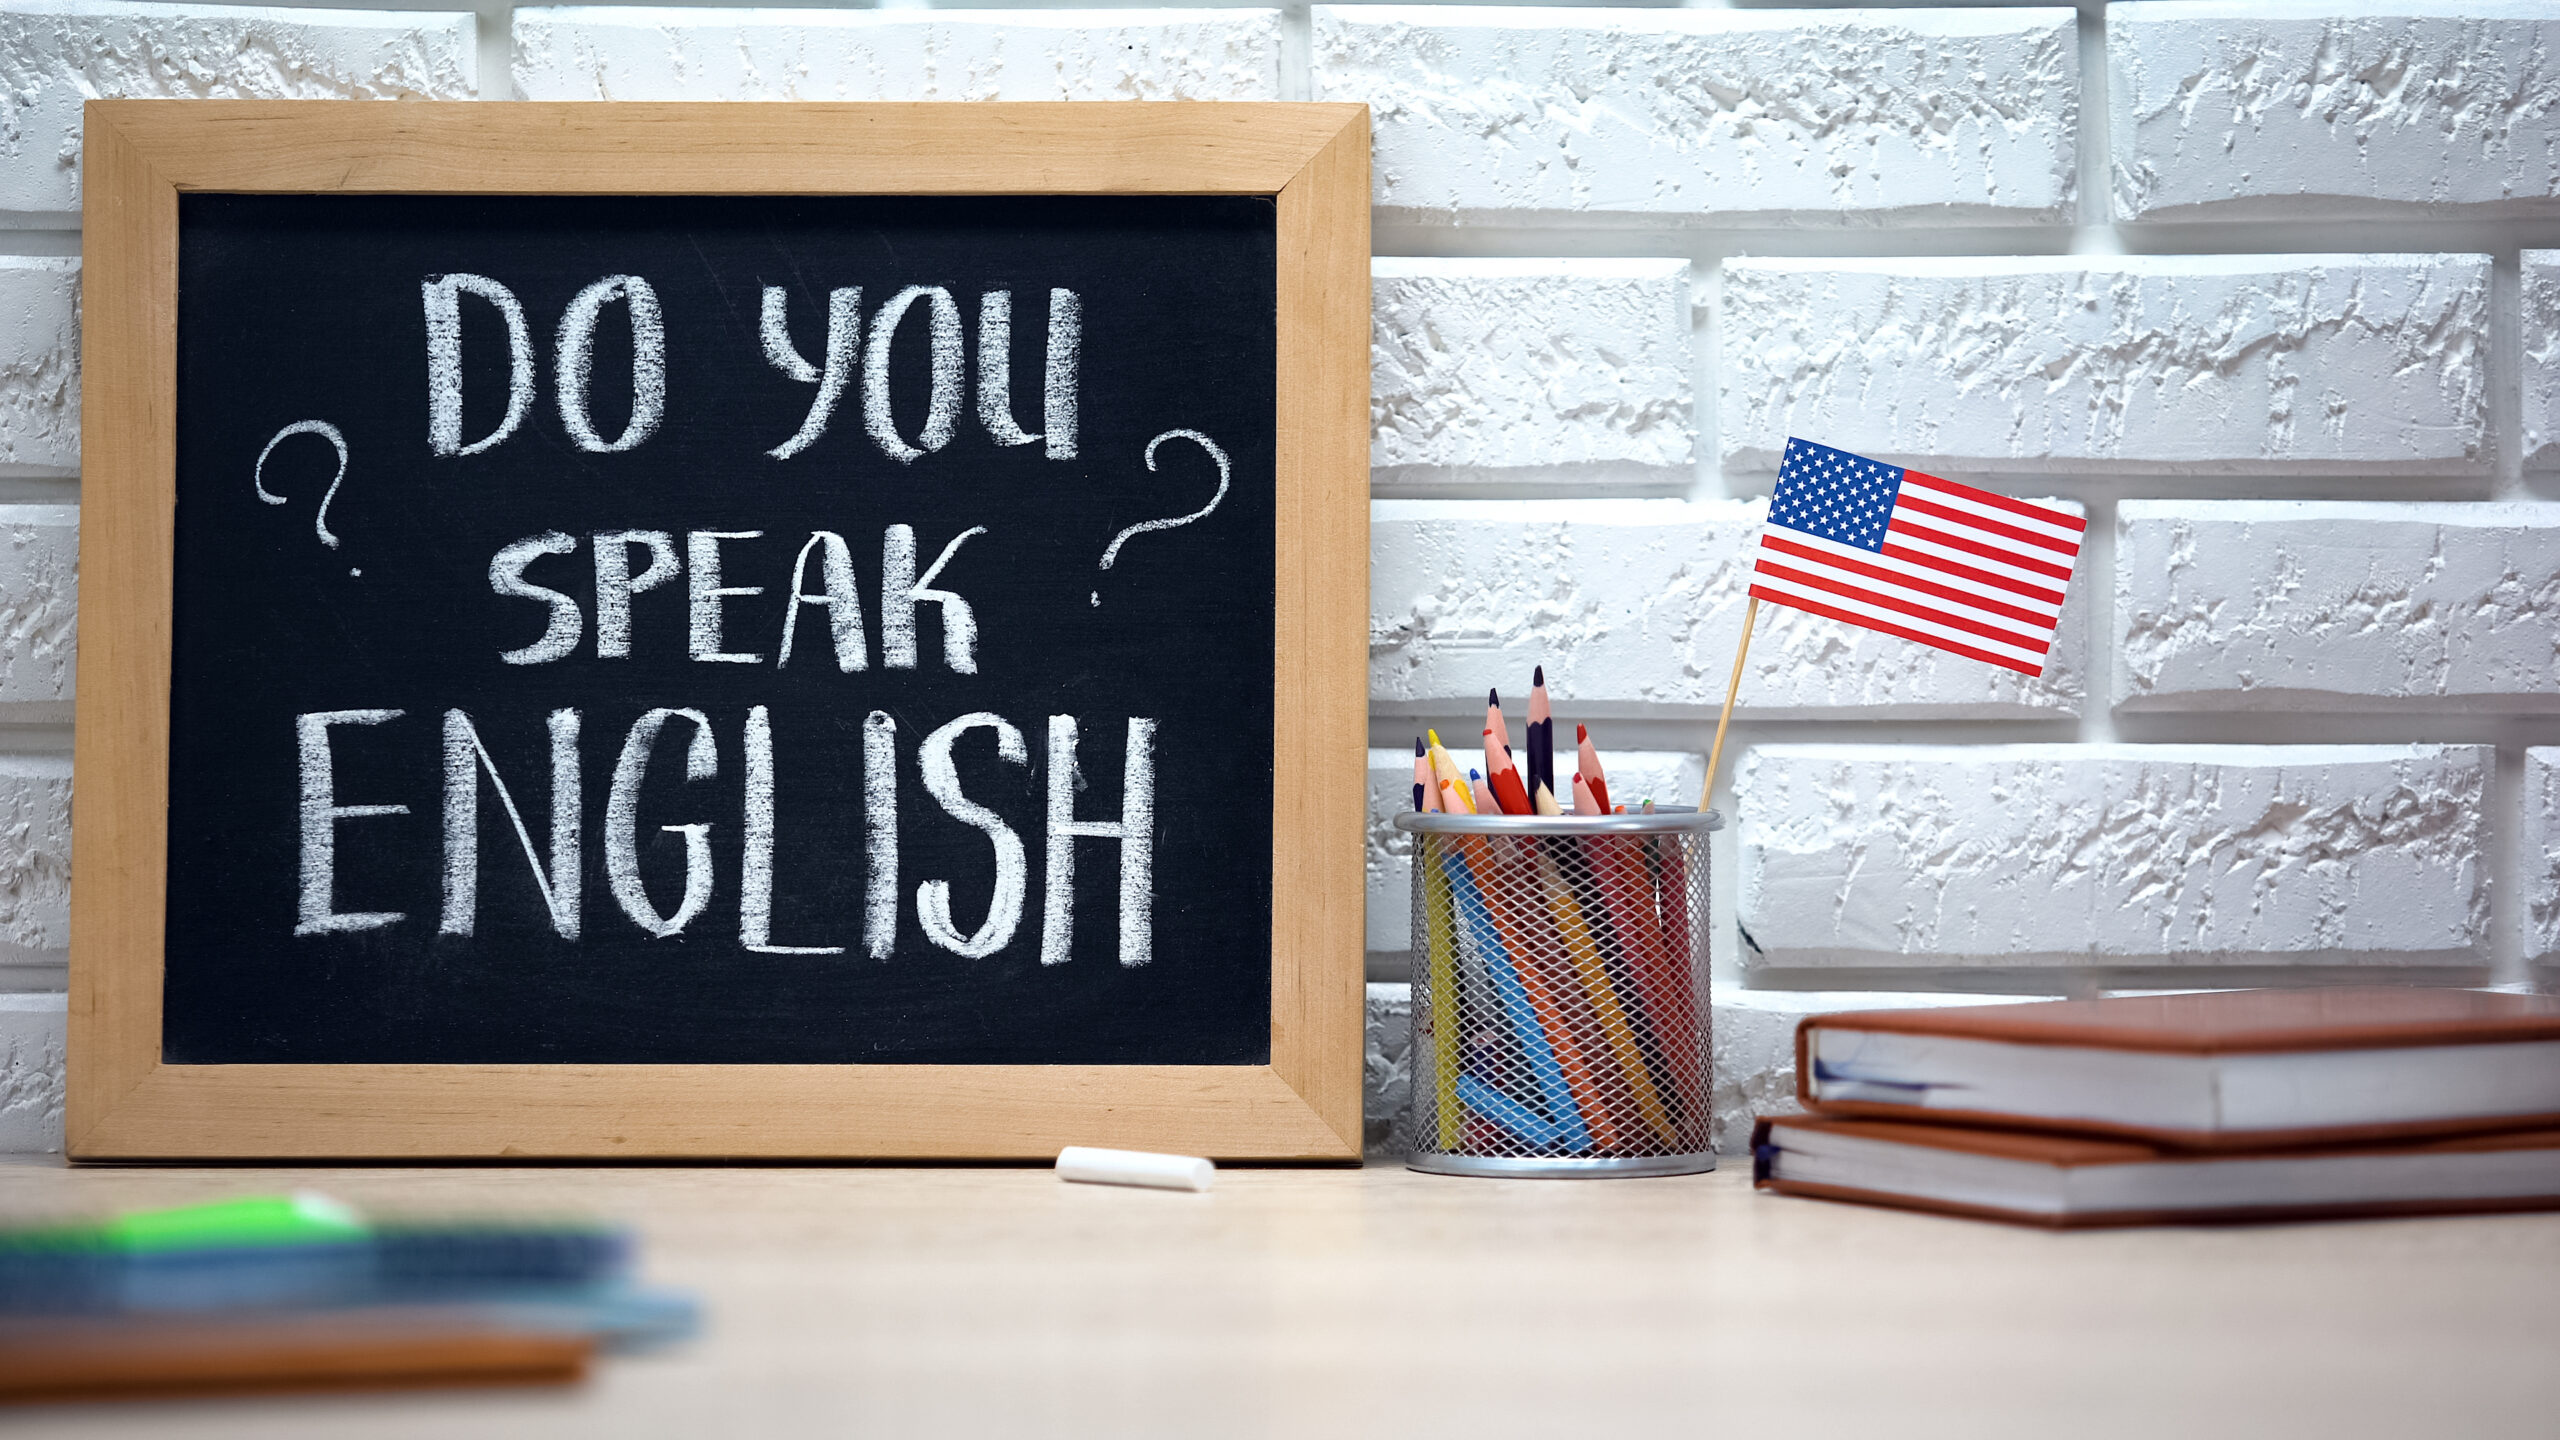 Do you speak good english. Do you speak English картинки. Плакат do you speak English. Speak English по английскому. Do you speak English на доске.